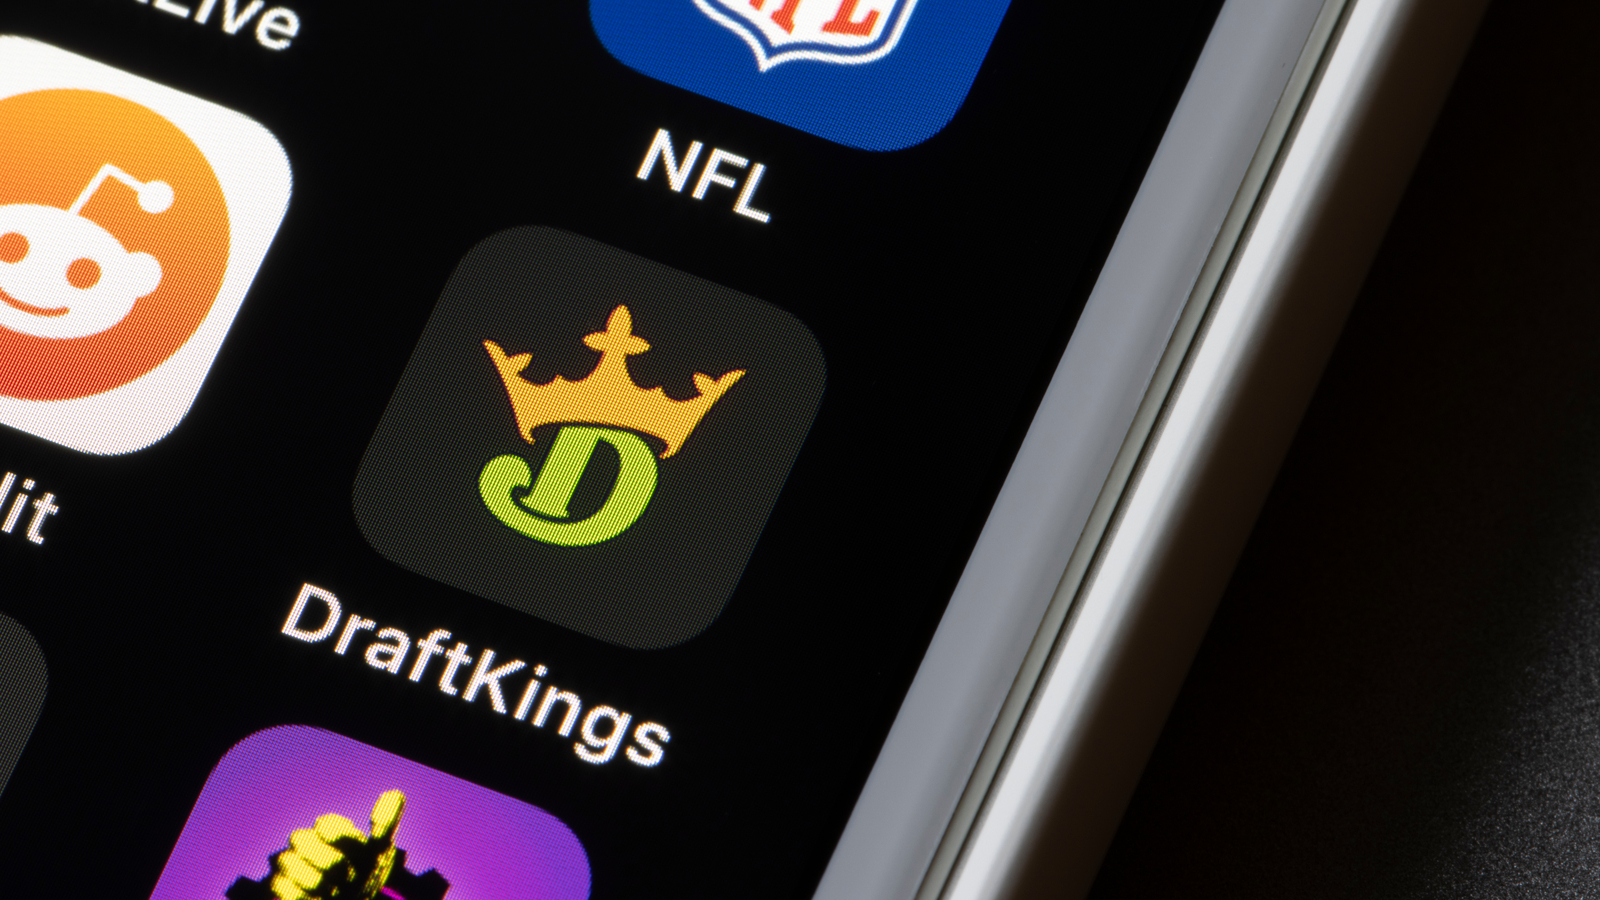 DraftKings app representing DKNG stock.